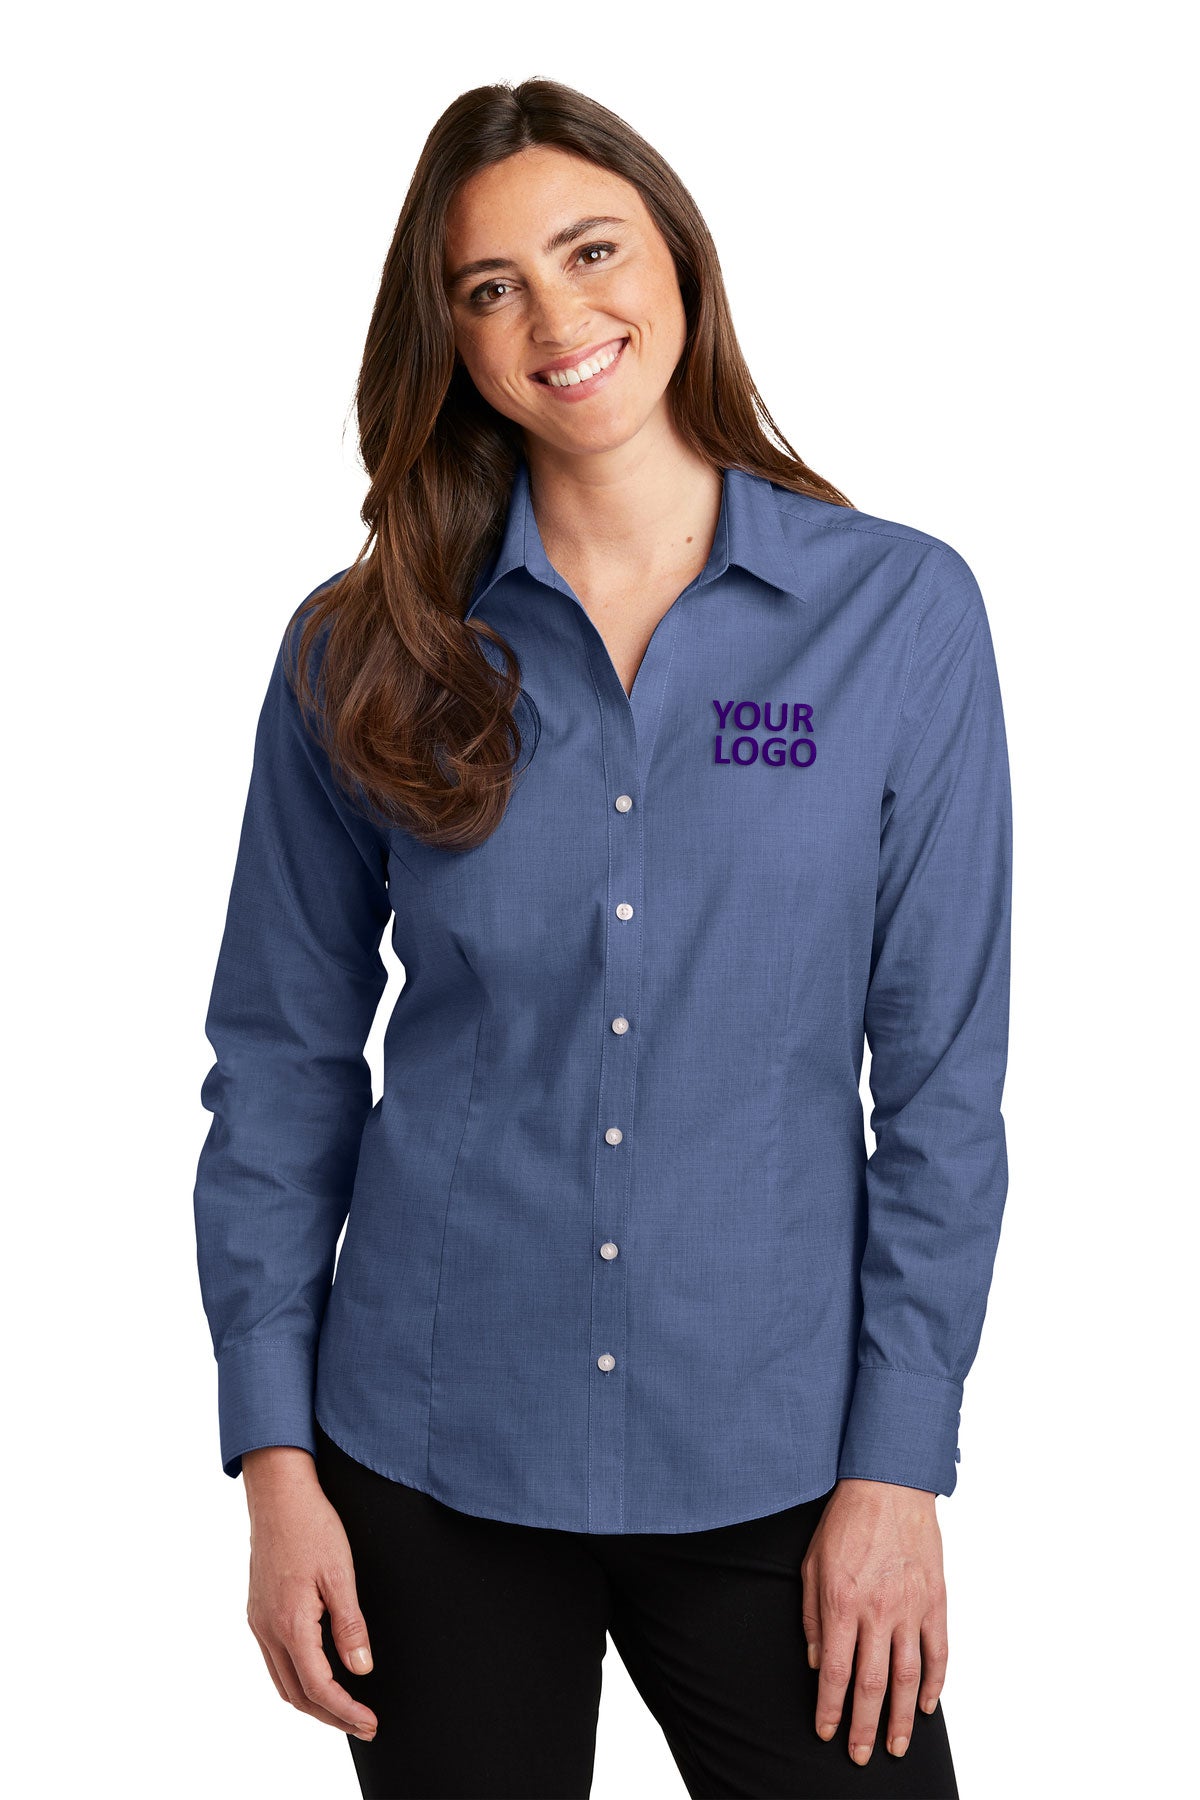 Port Authority Deep Blue L640 custom logo shirts